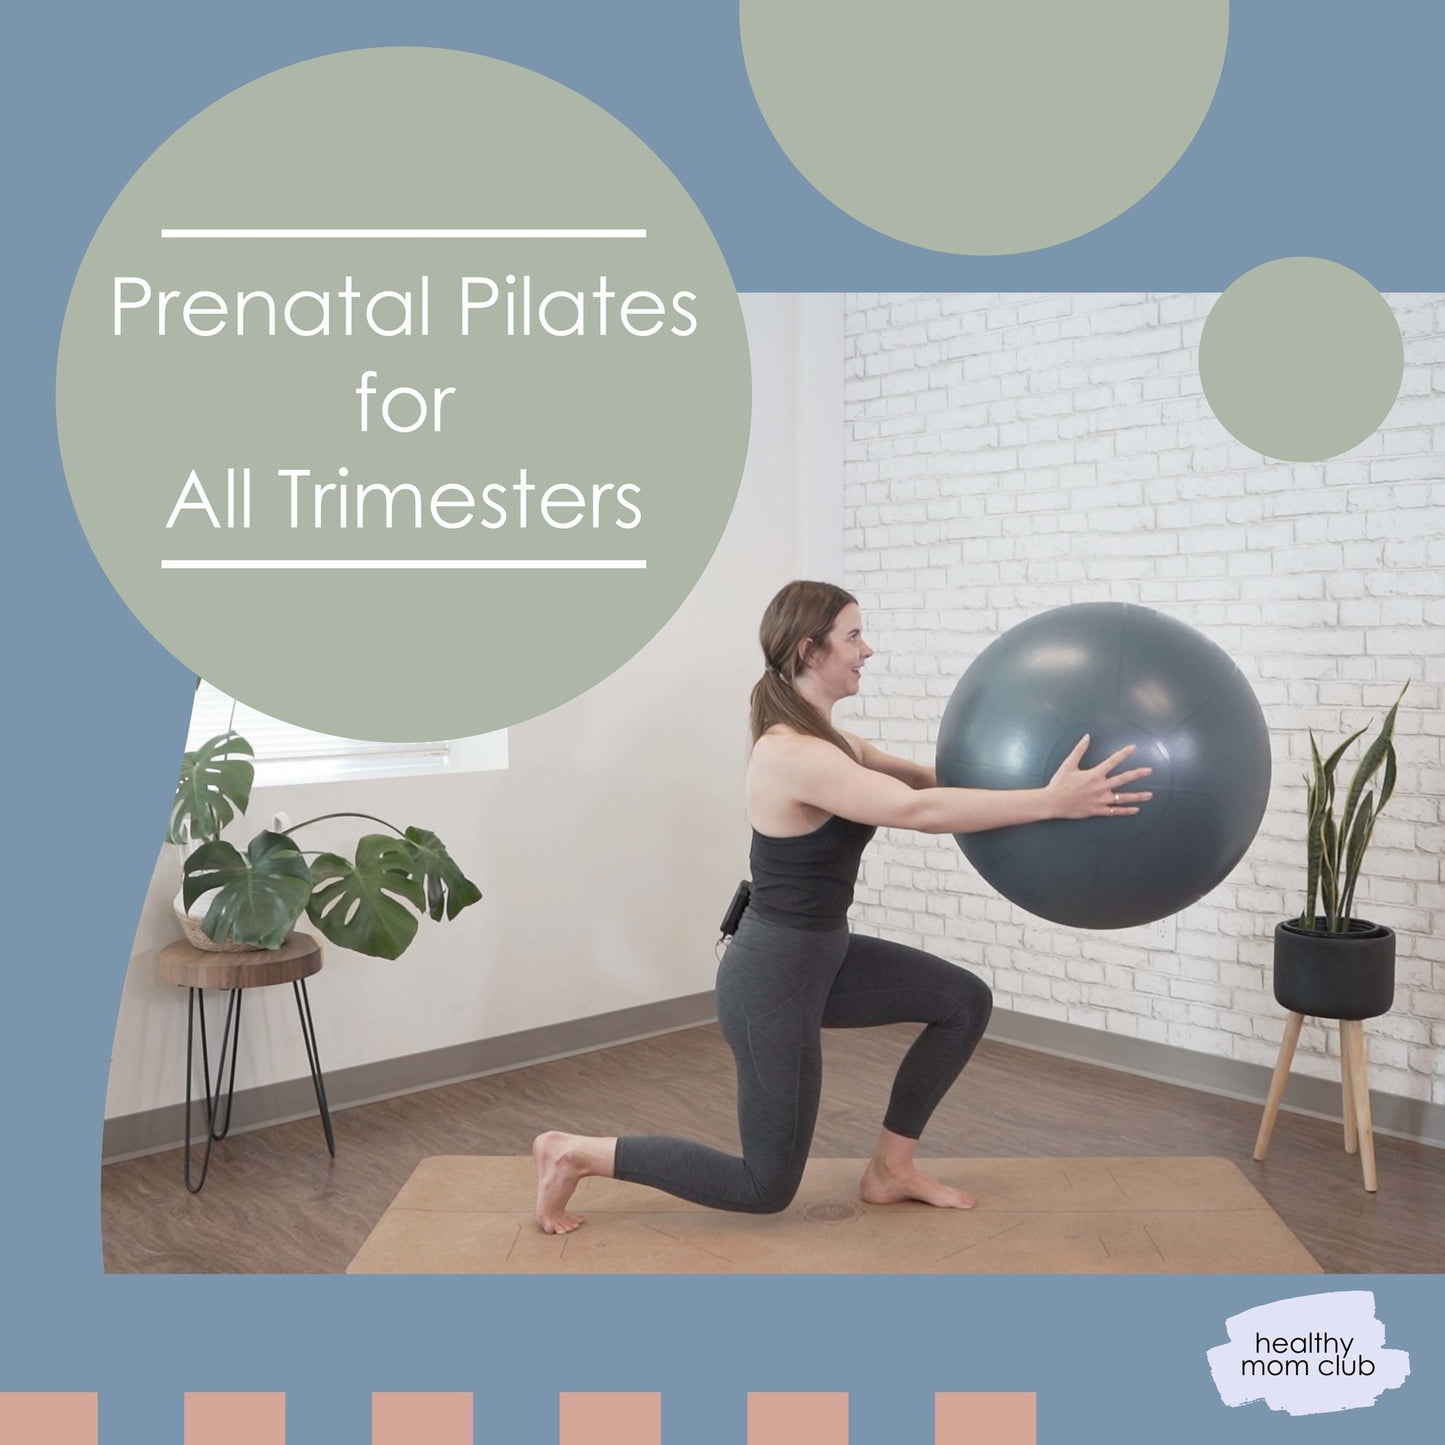 Kaya Health Clubs  Pilates Pregnancy Information Pack